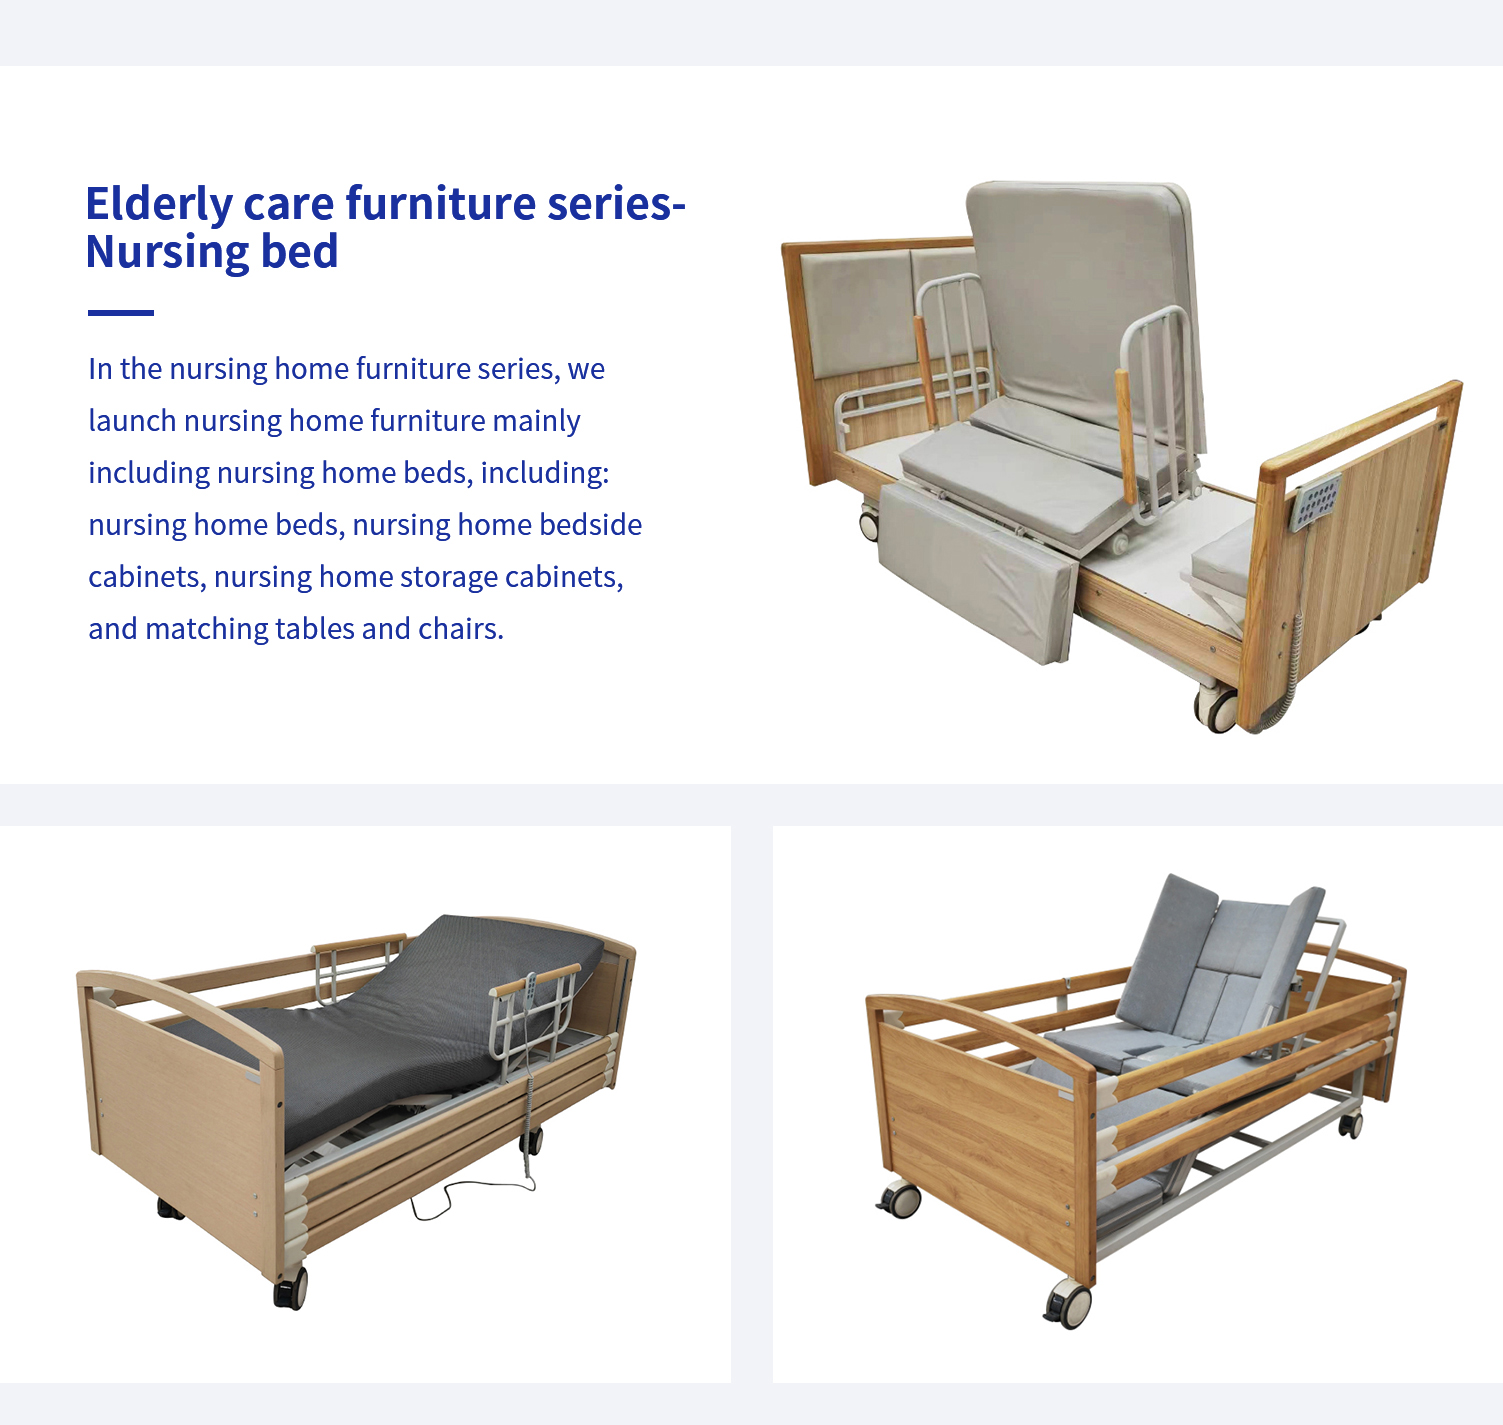 Elderly care furniture series- Nursing bed